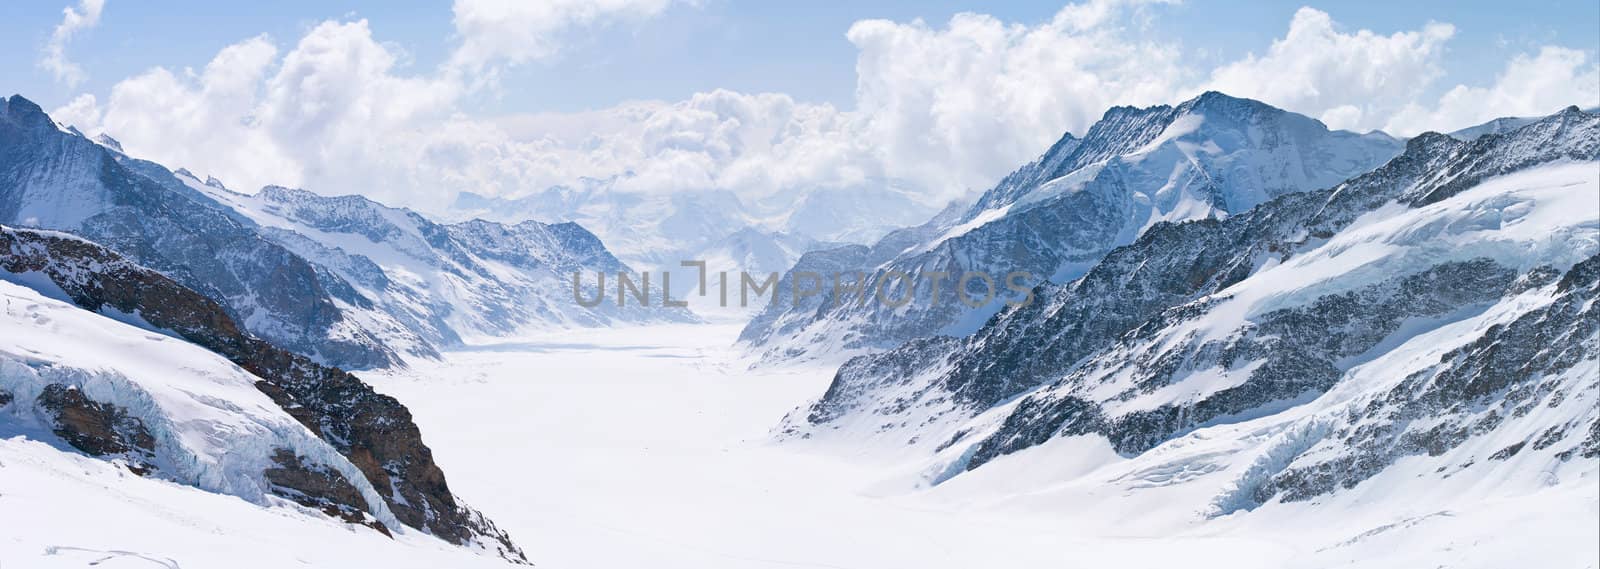 Panorama Scenic of Great Aletsch Glacier Jungfrau region,Part of Swiss Alps Alpine Snow Mountain Landscape at Switzerland.